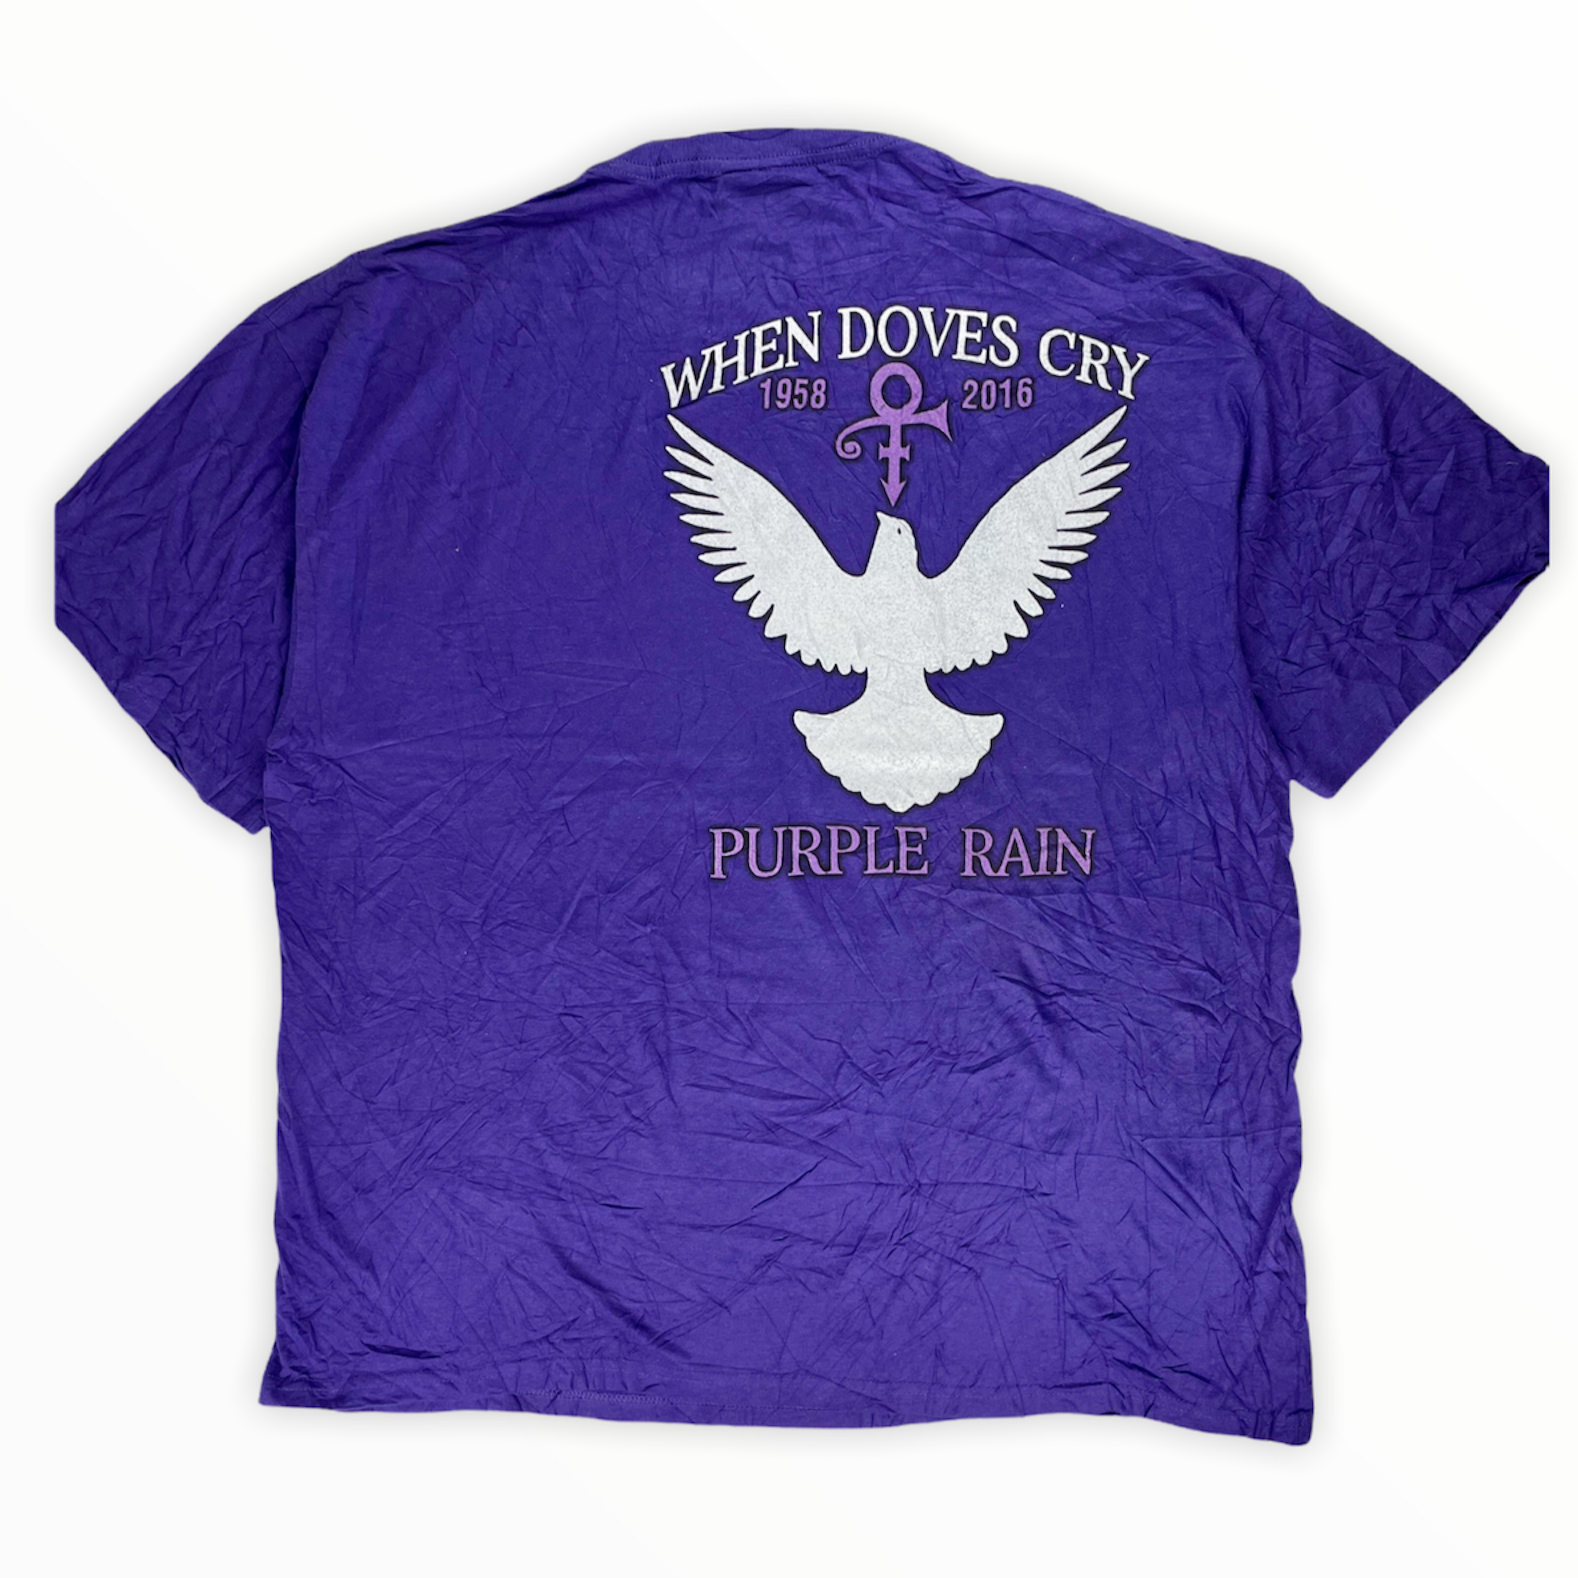 Vintage Prince Memorial T-shirt - Restorecph